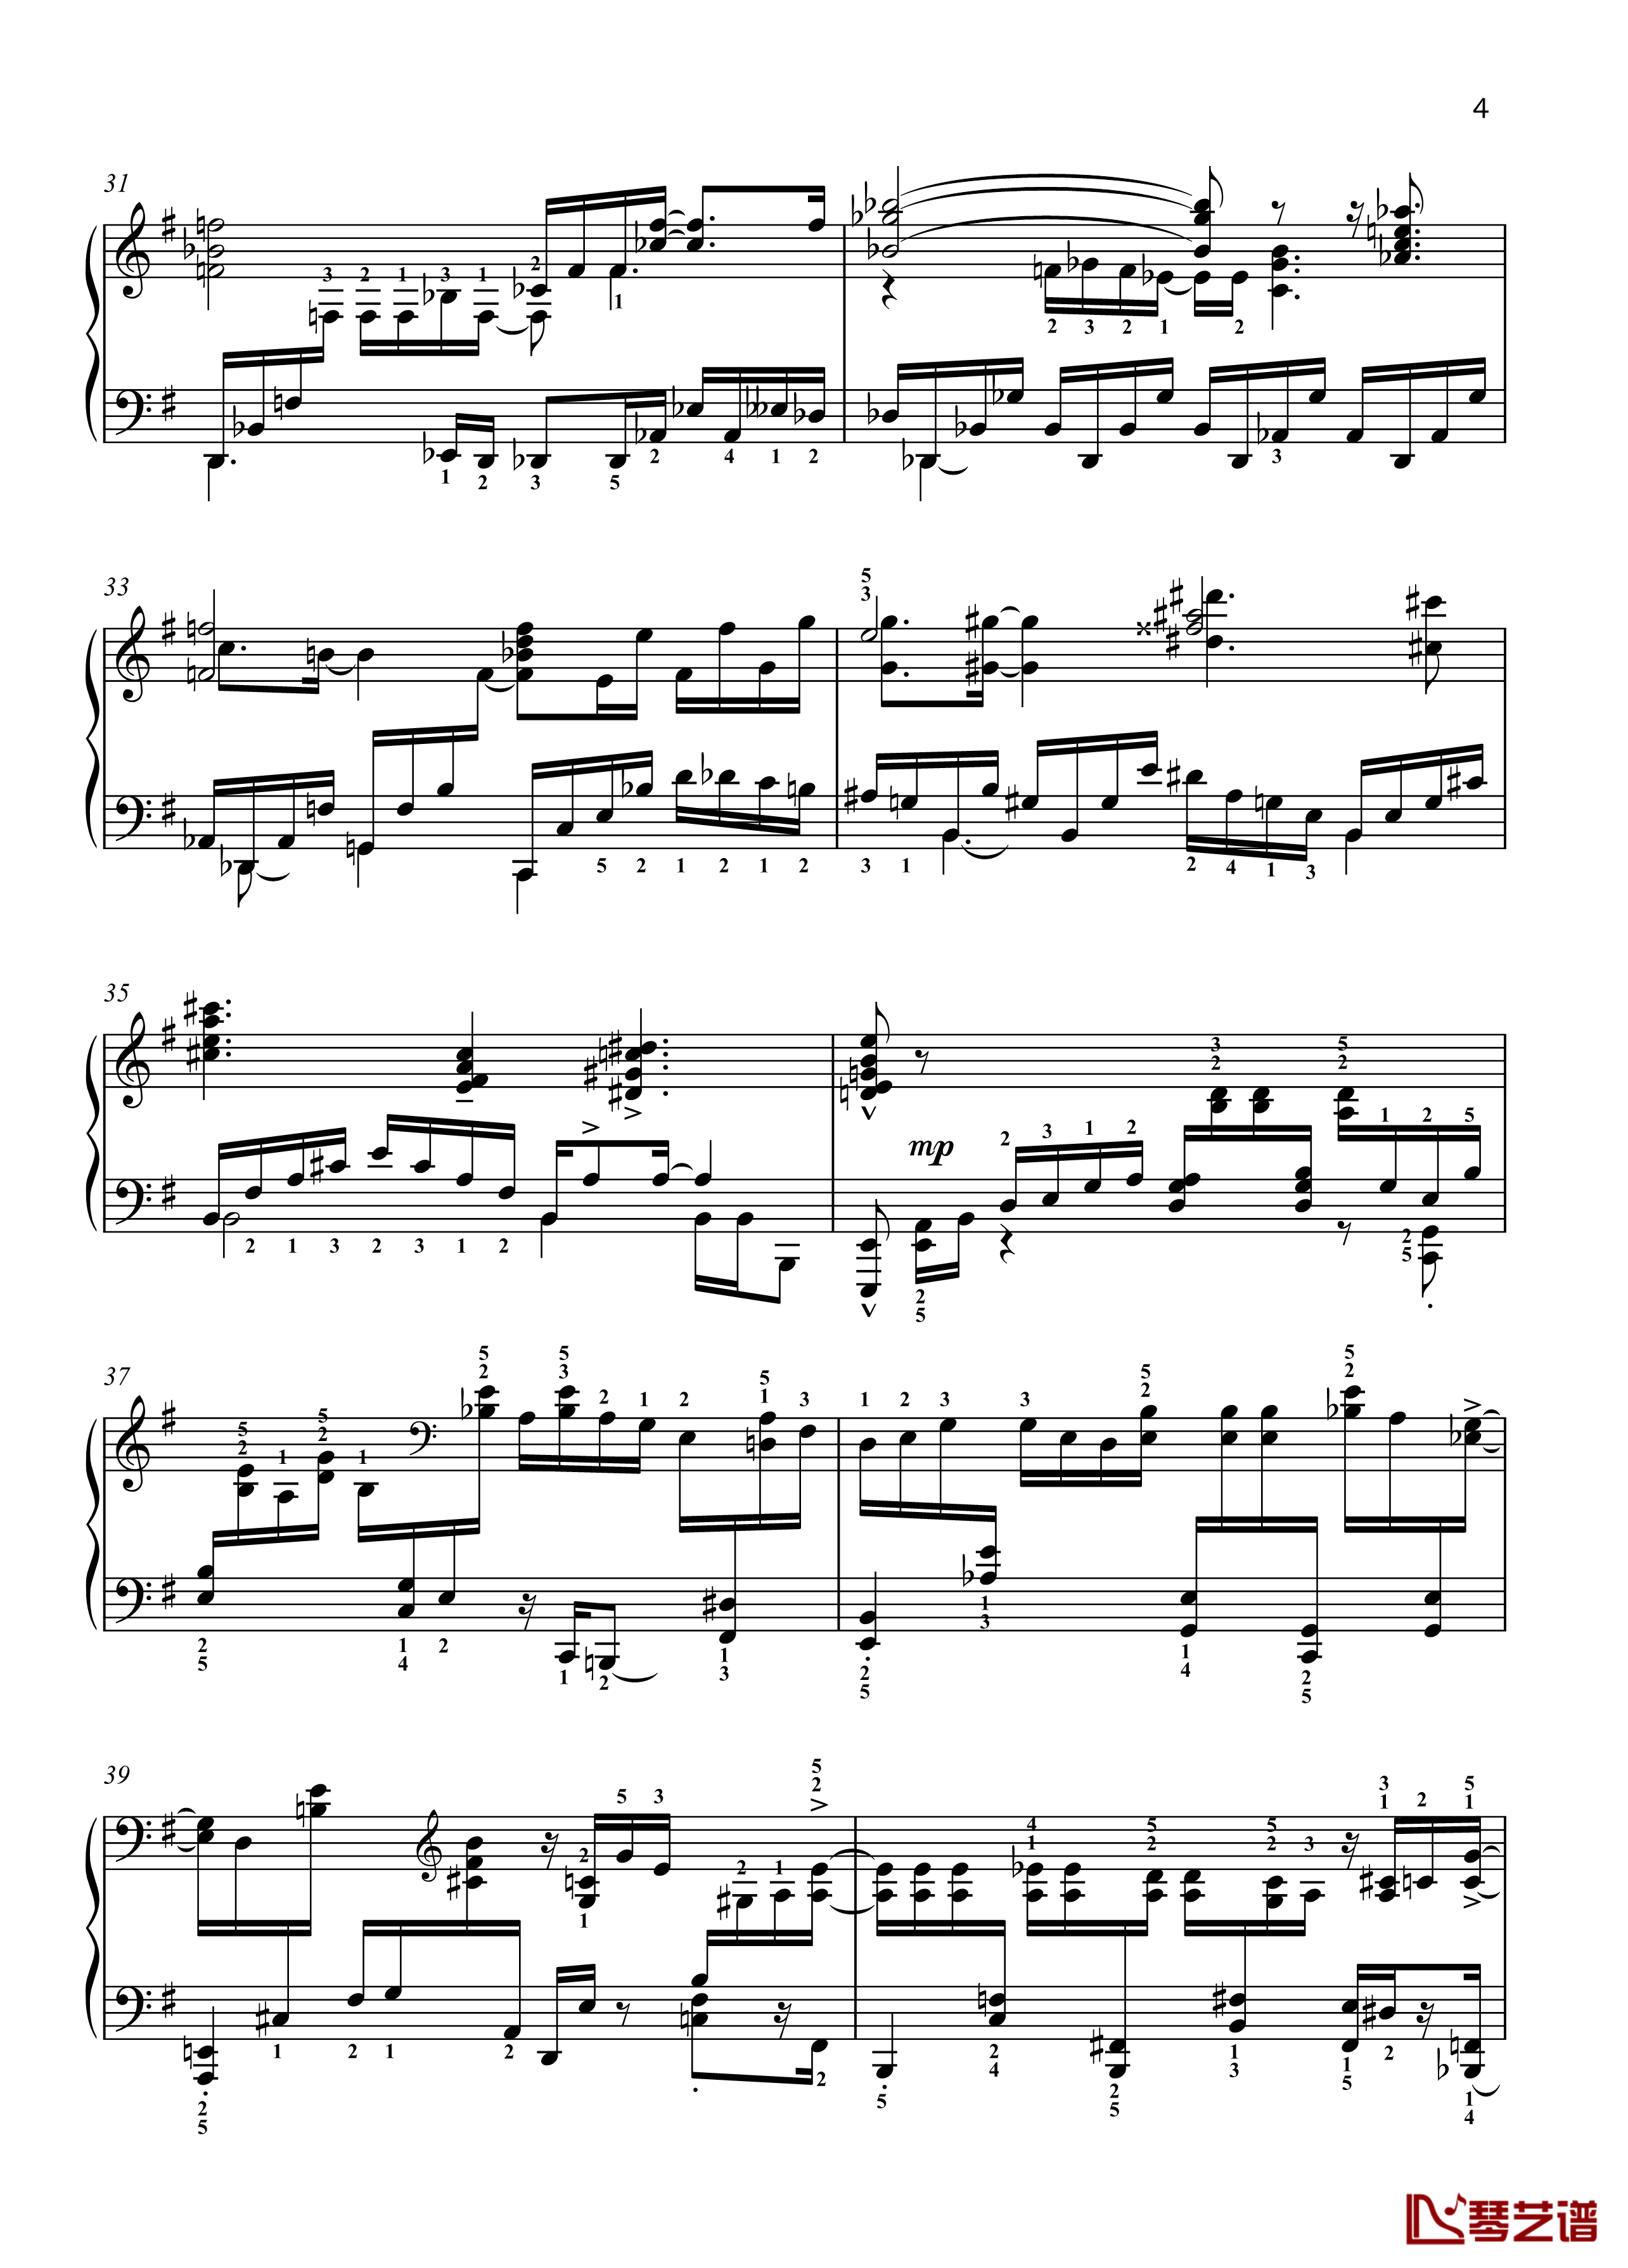 No. 3. Toccatina钢琴谱-带指法-八首音乐会练习曲 Eight Concert ?tudes Op 40-爵士-尼古拉·凯帕斯汀